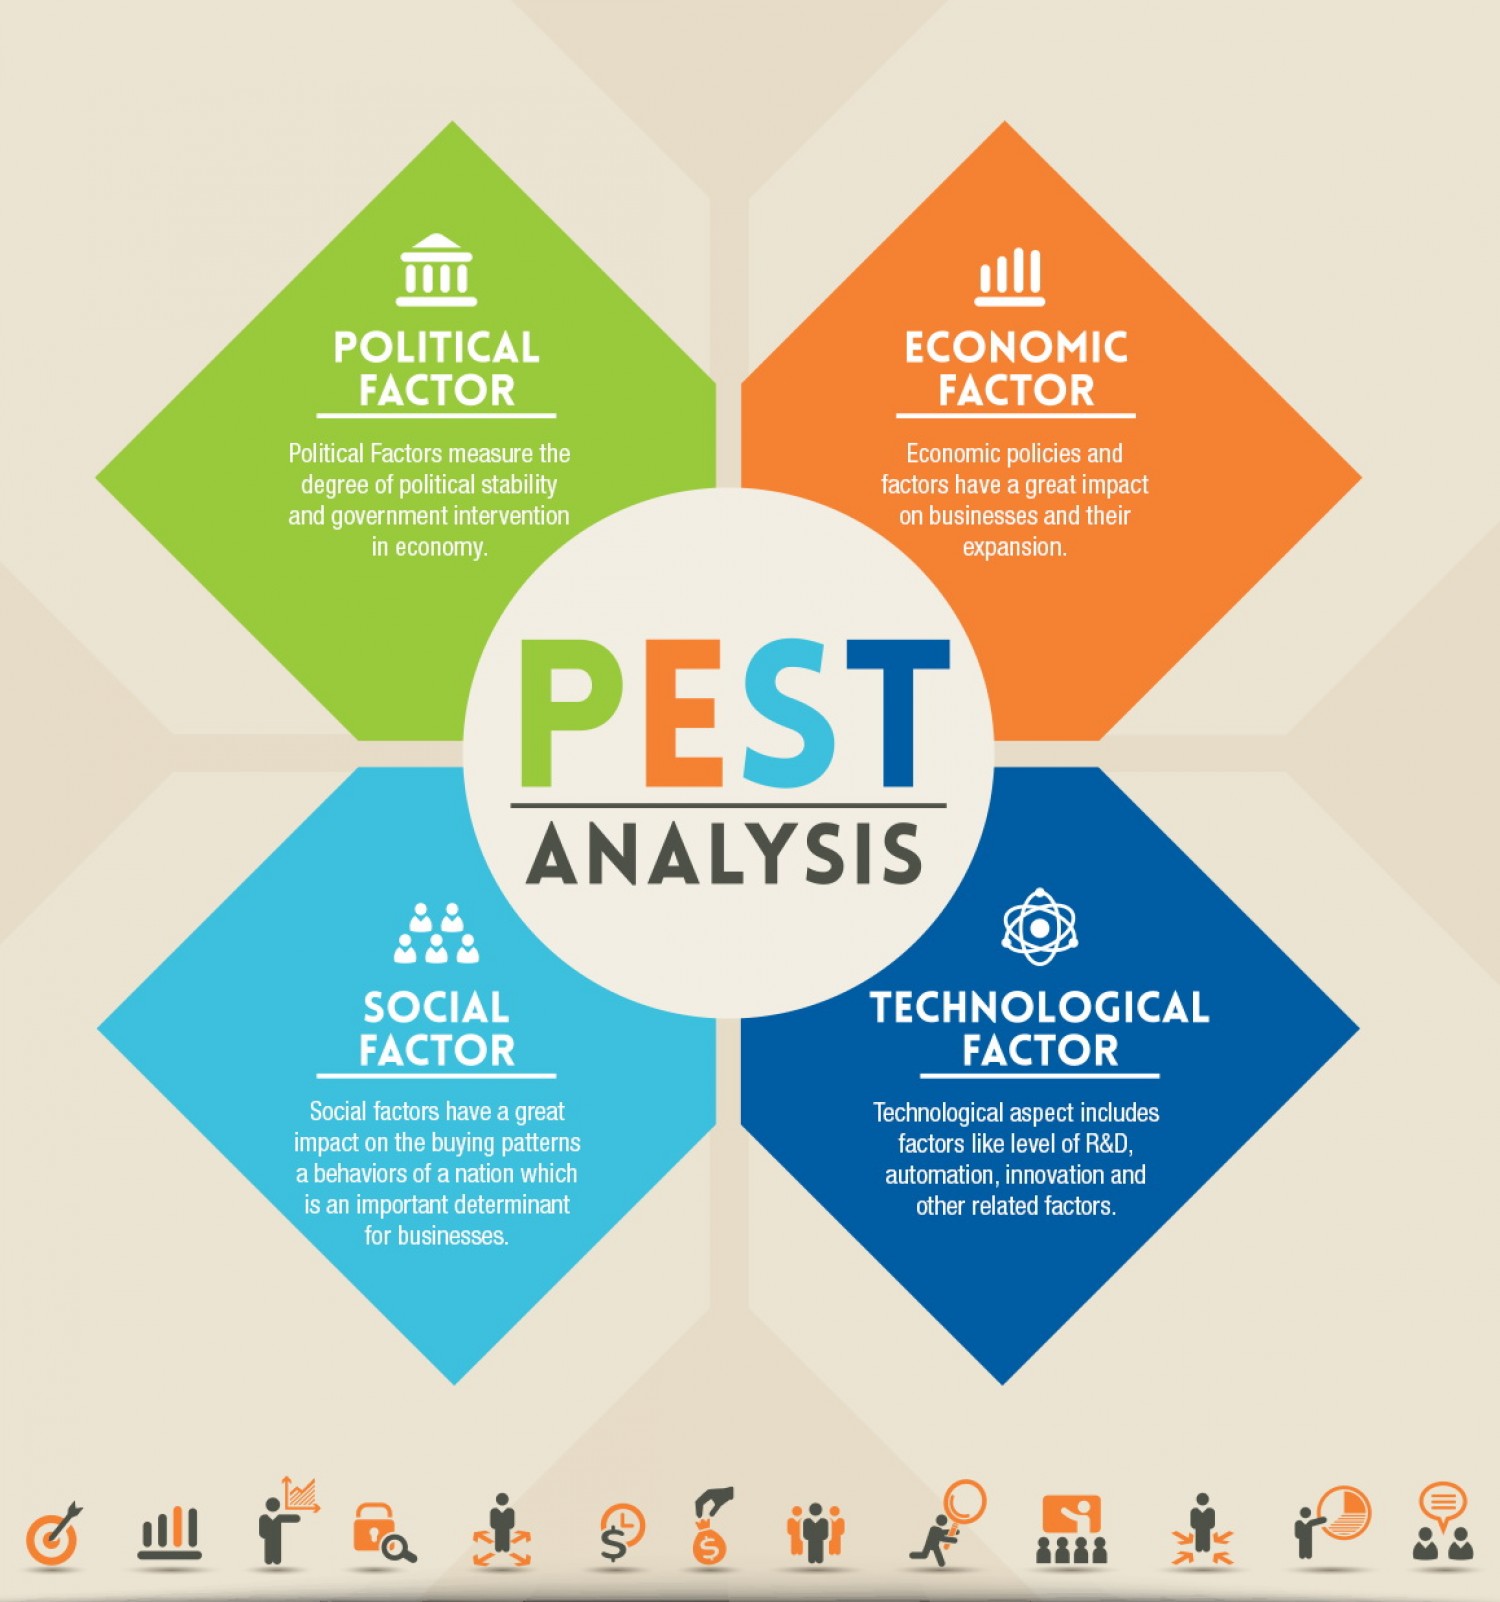 pest 为一种企业所处宏观环境分析模型,所谓pest,即p是政治(politics